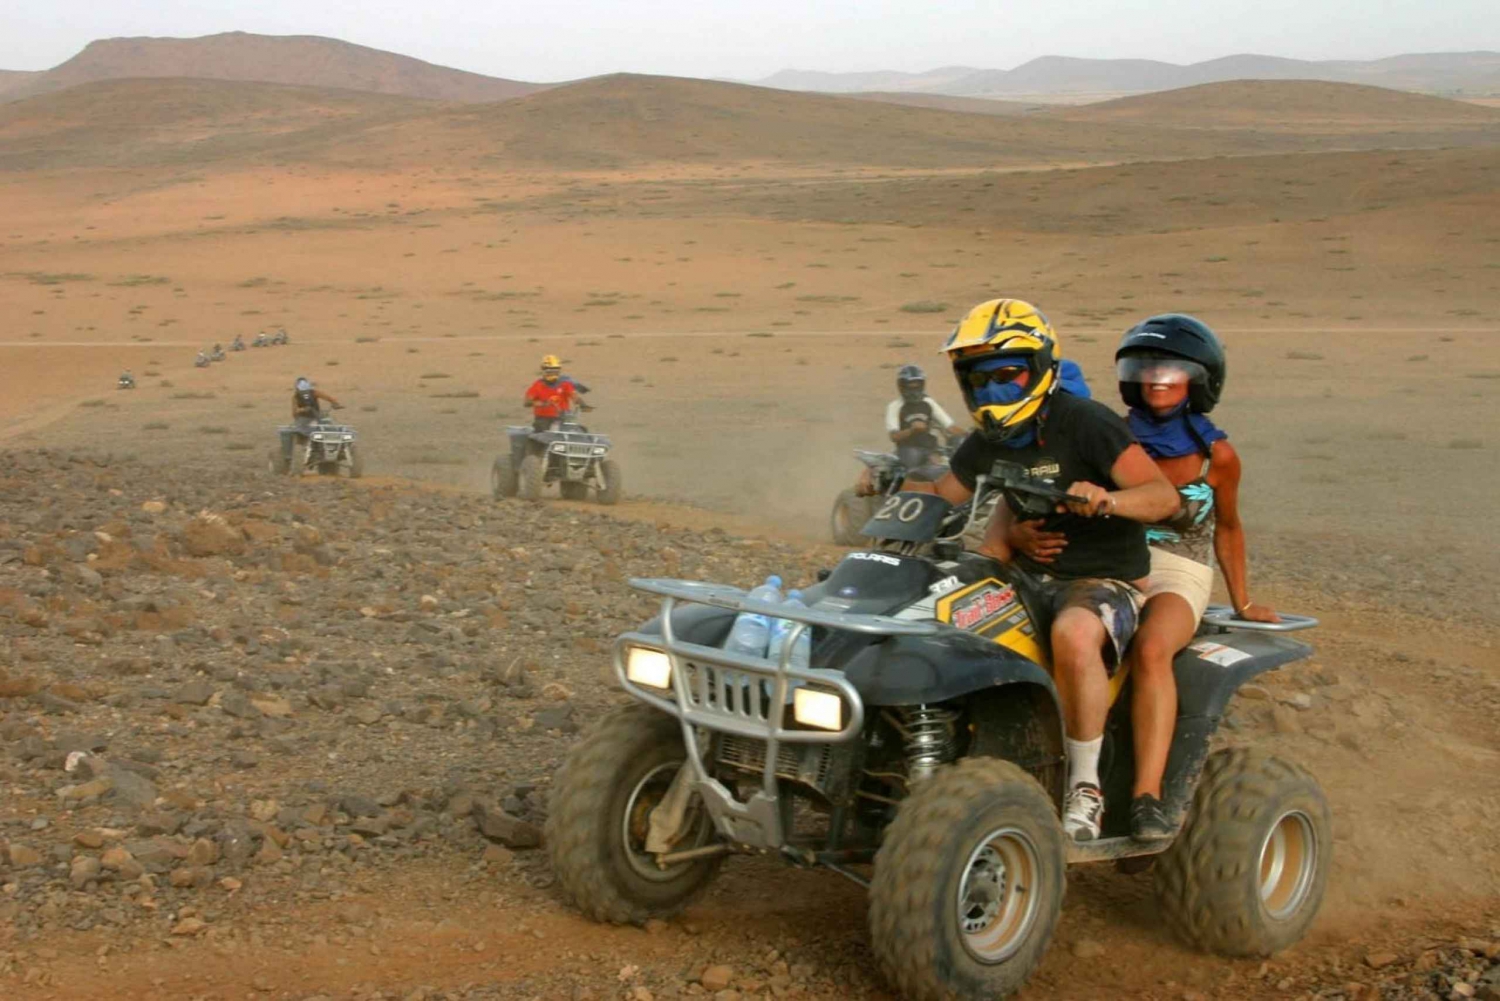 Agafay Desert Sunset Quad Ride: An Unforgettable Experience.